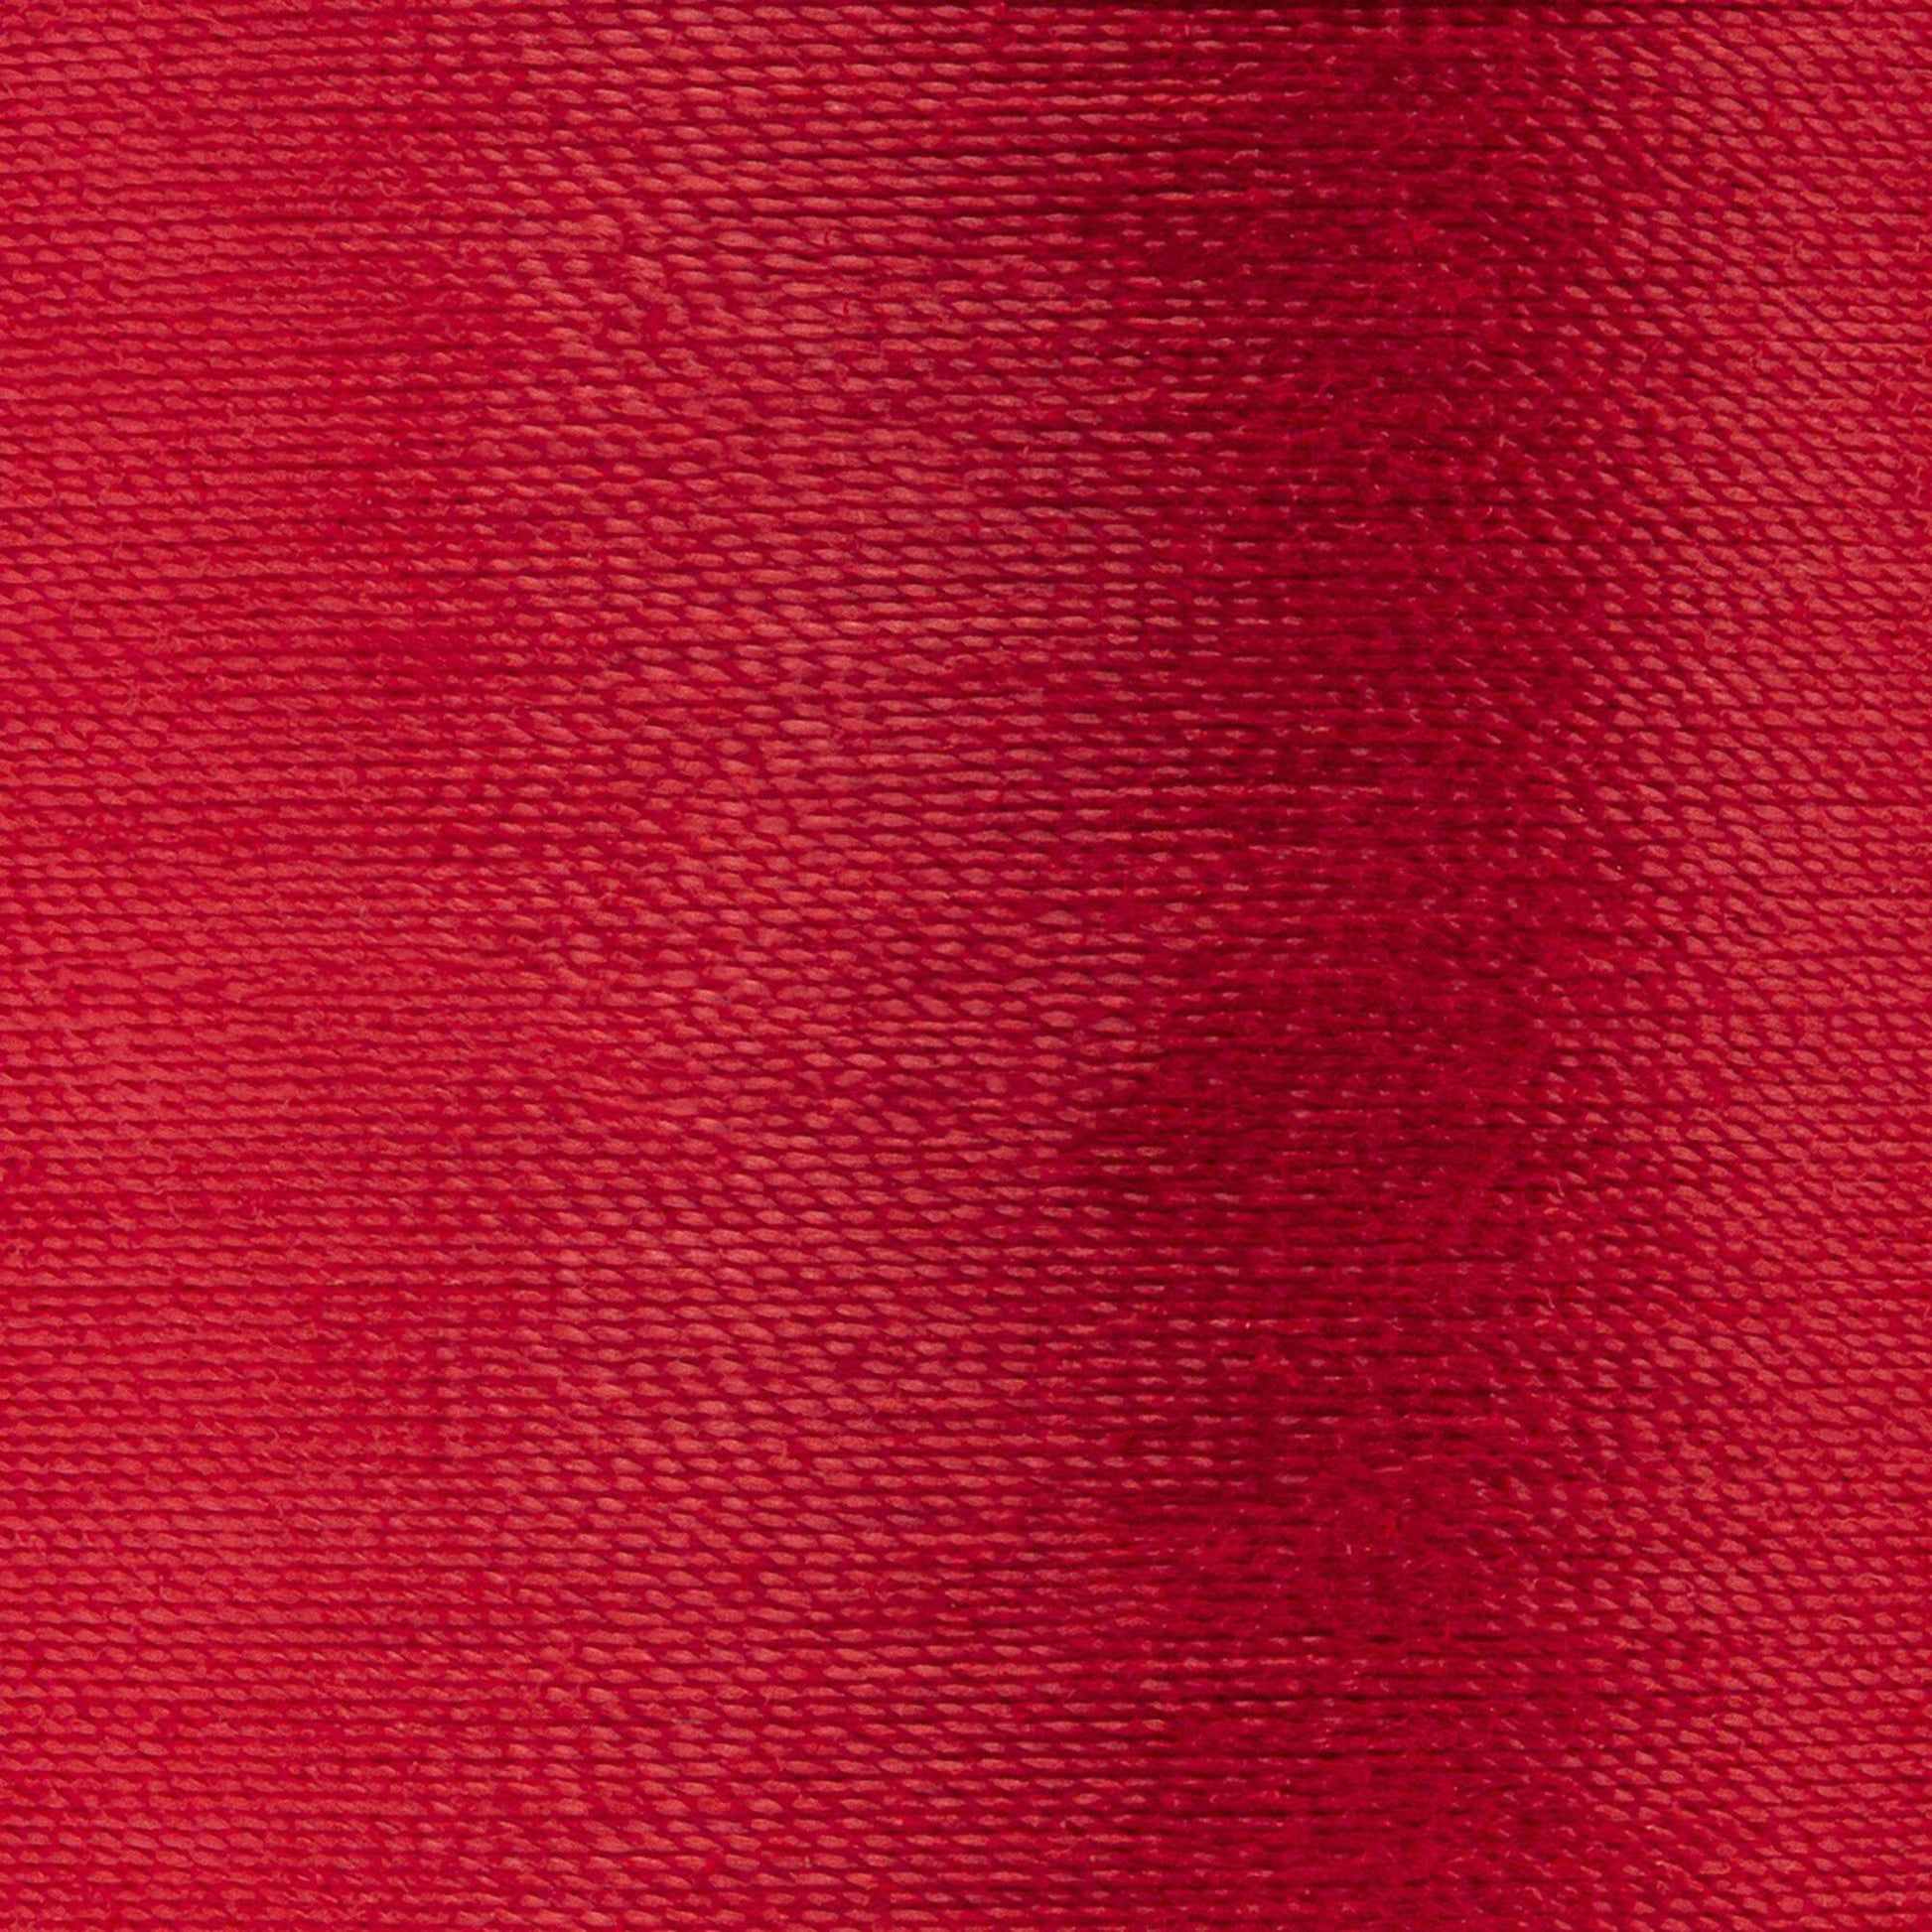 Coats & Clark All Purpose Thread (500 Yards) Atom Red